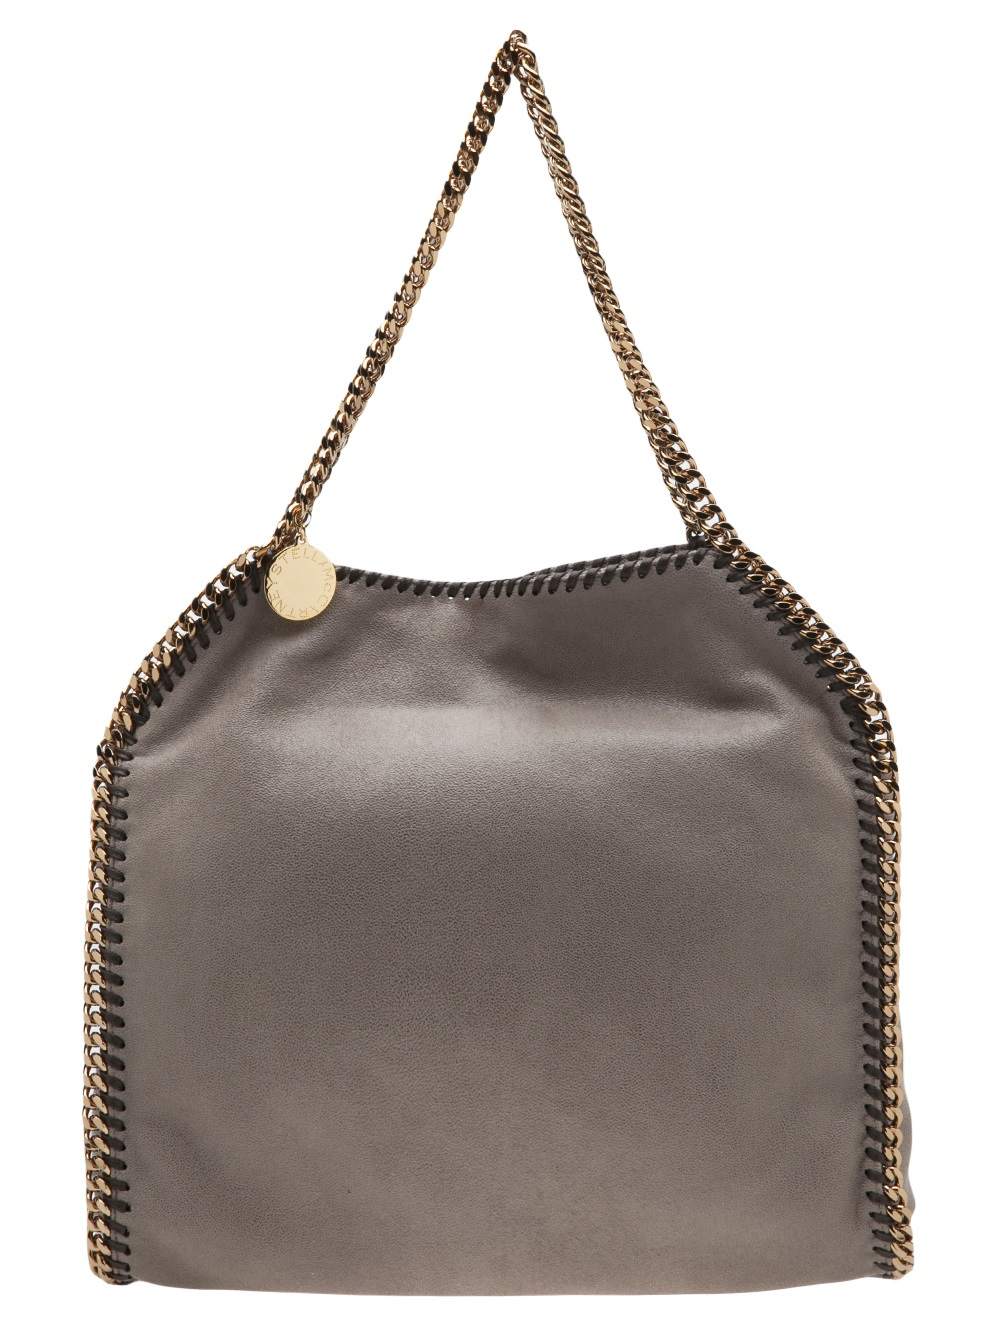 Stella McCartney Chain Trimmed Shoulder Bag in Gray - Lyst